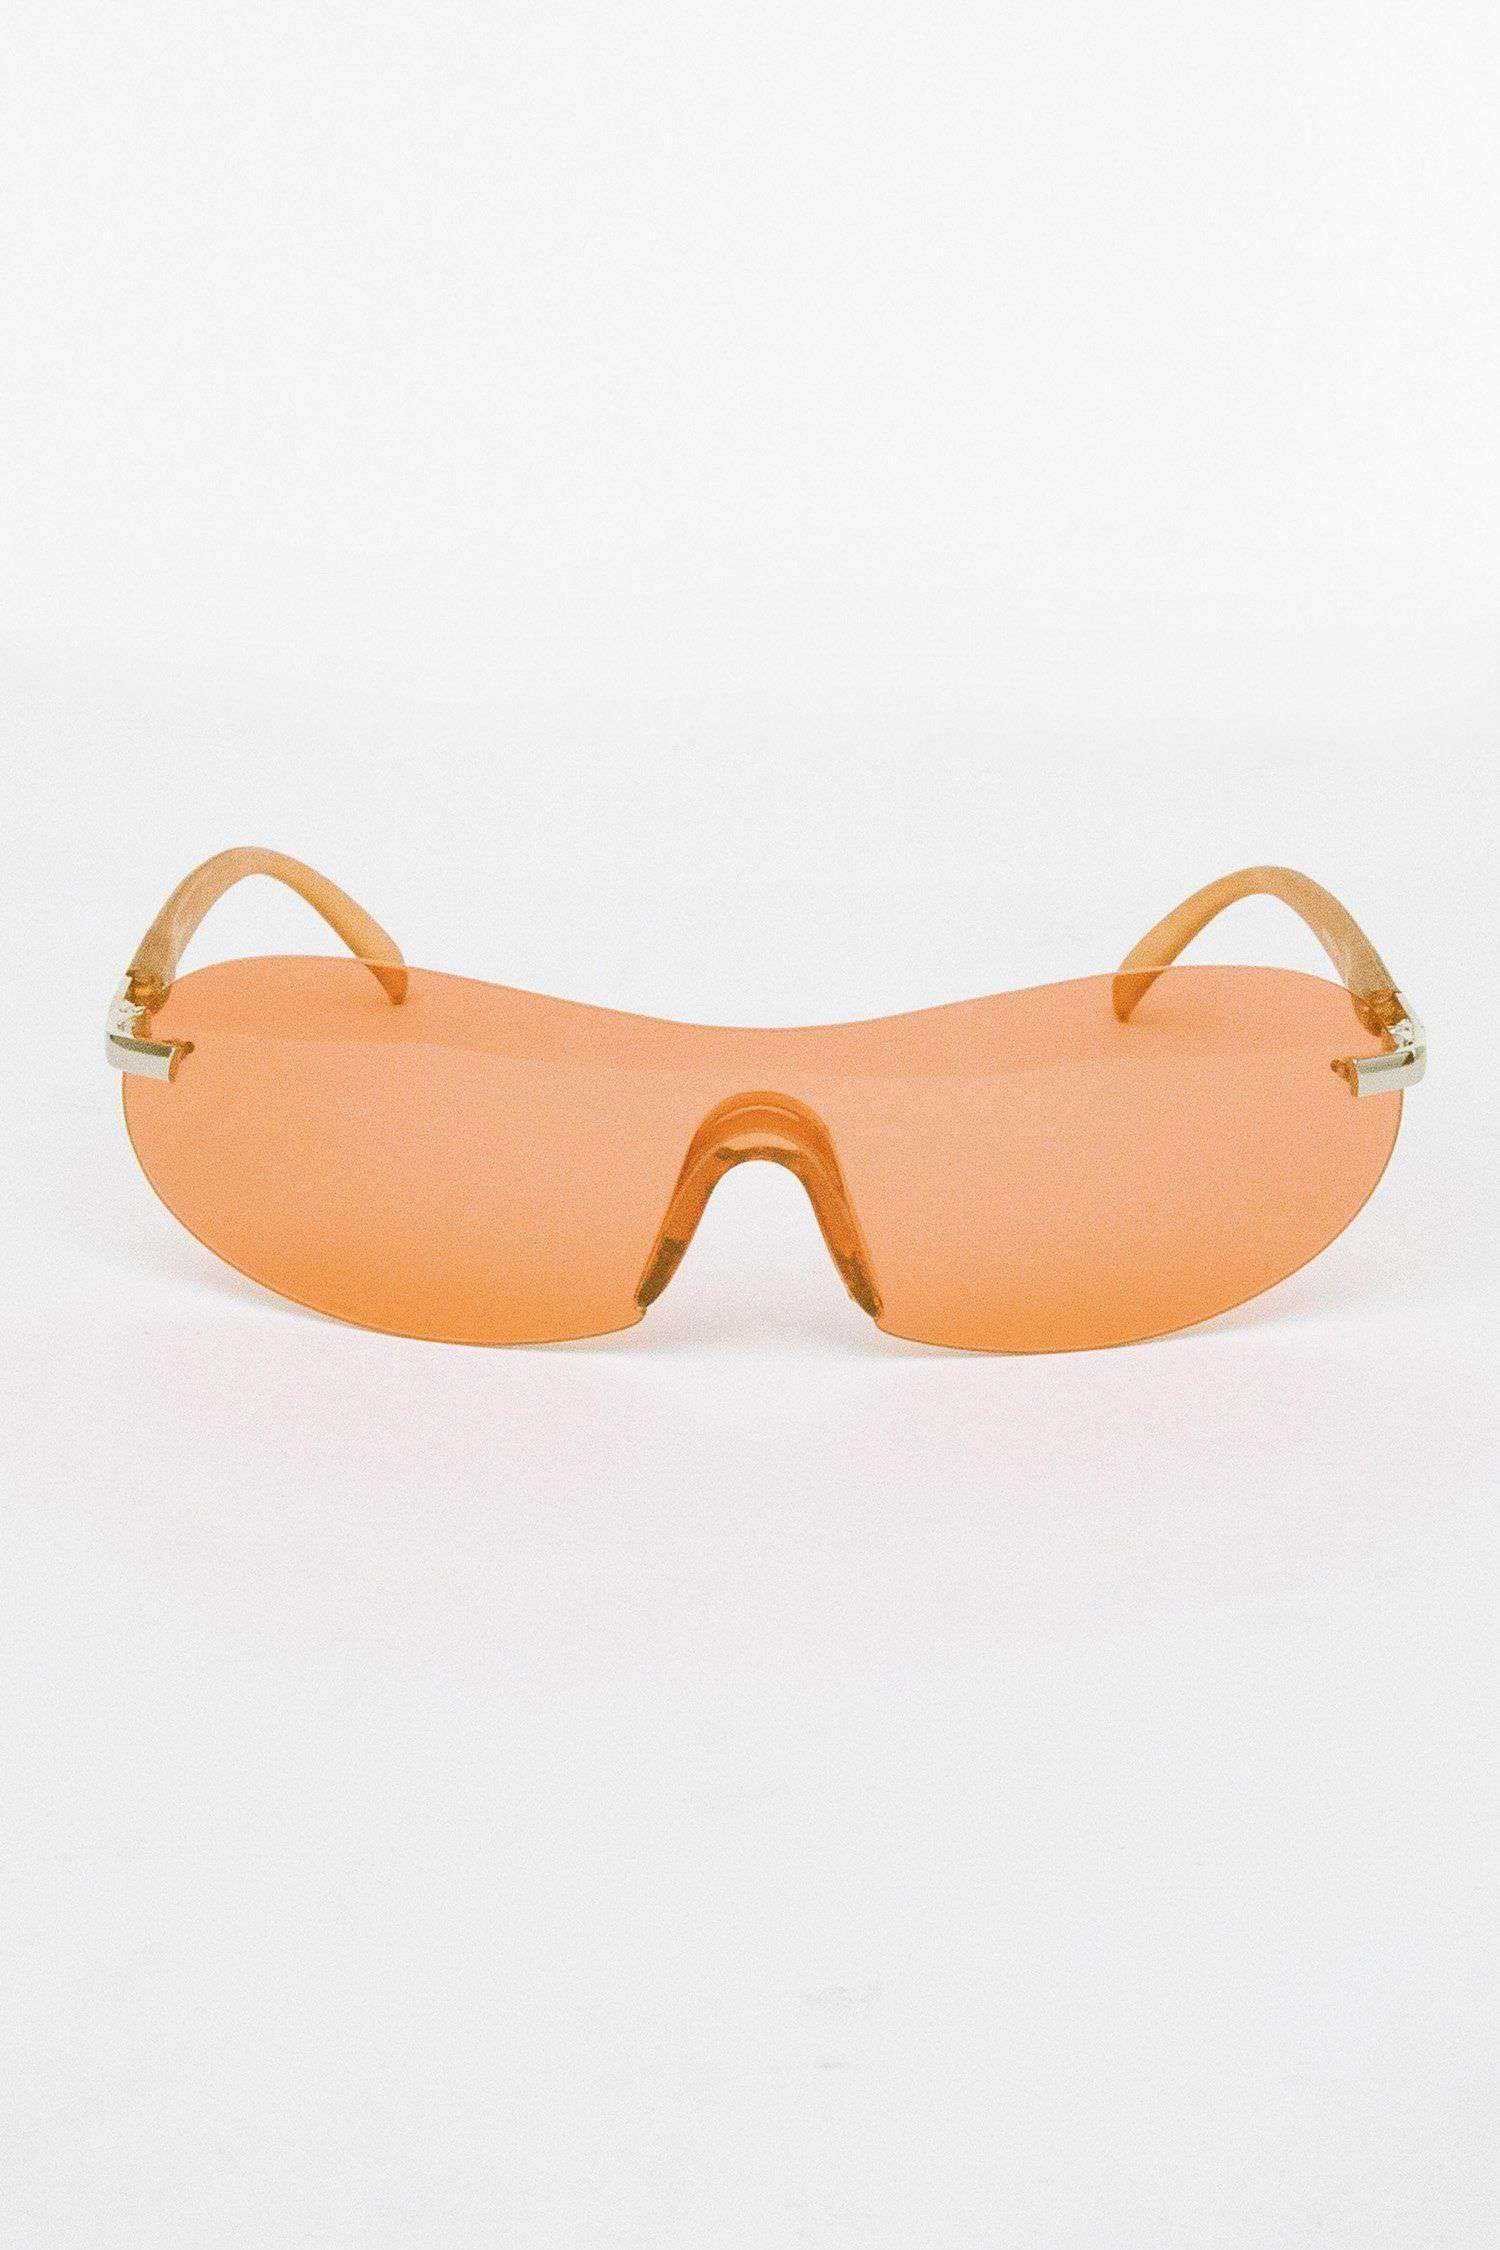 SGSHIELD - Buchanan Sport Shield Sunglasses Sunglasses Los Angeles Apparel Translucent Orange OS 